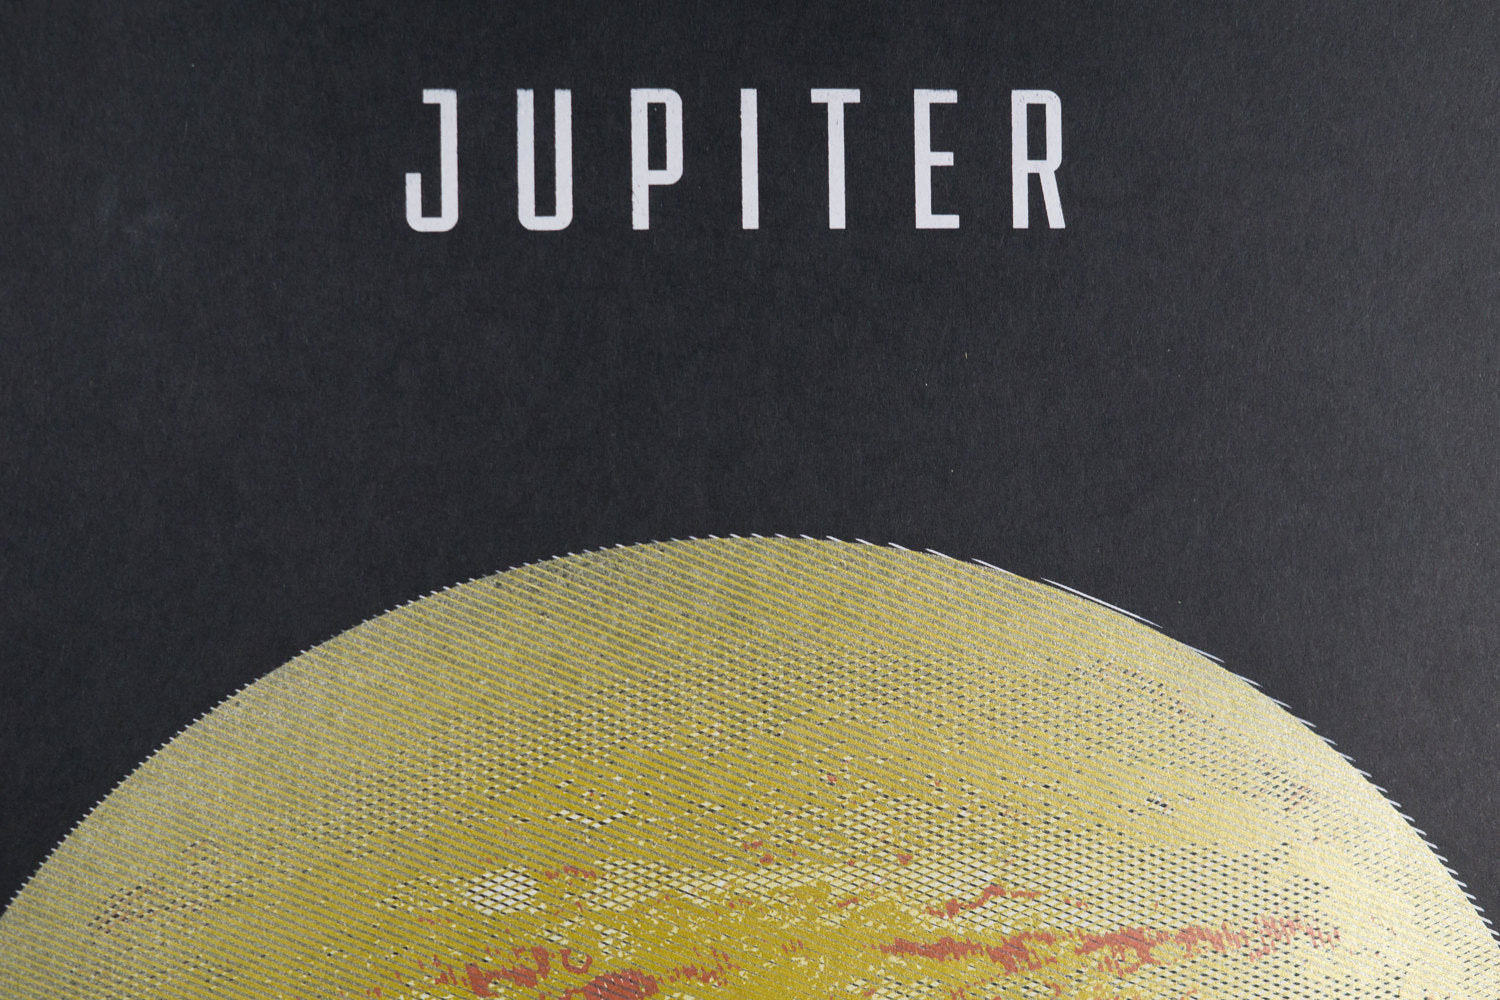 Planet Jupiter Poster